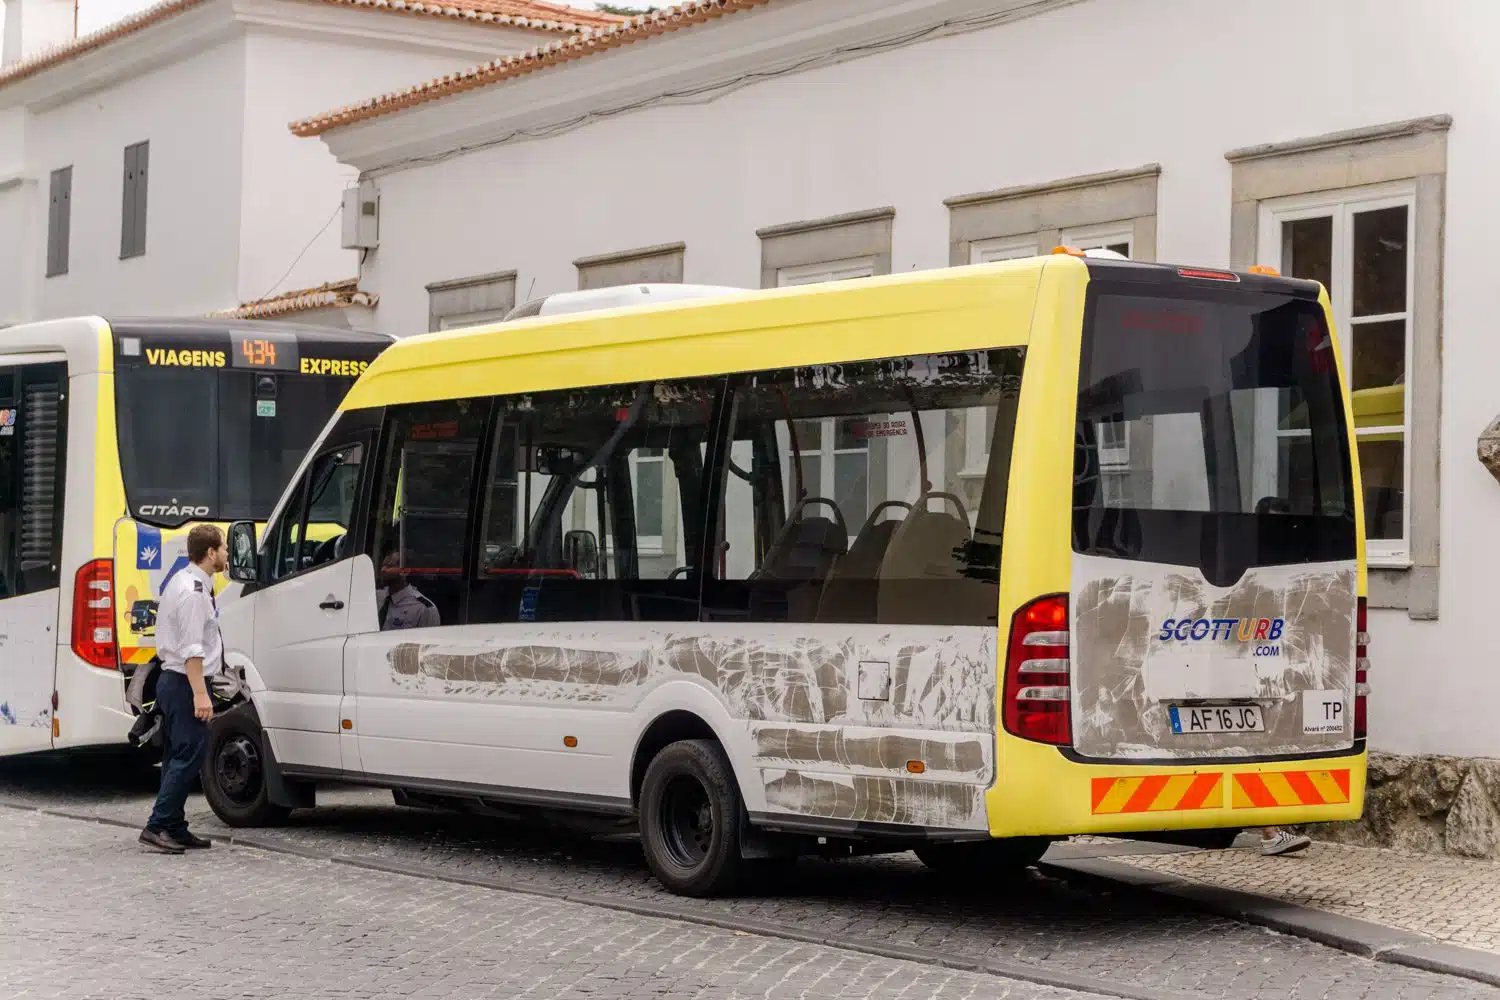 Sintra bus 435